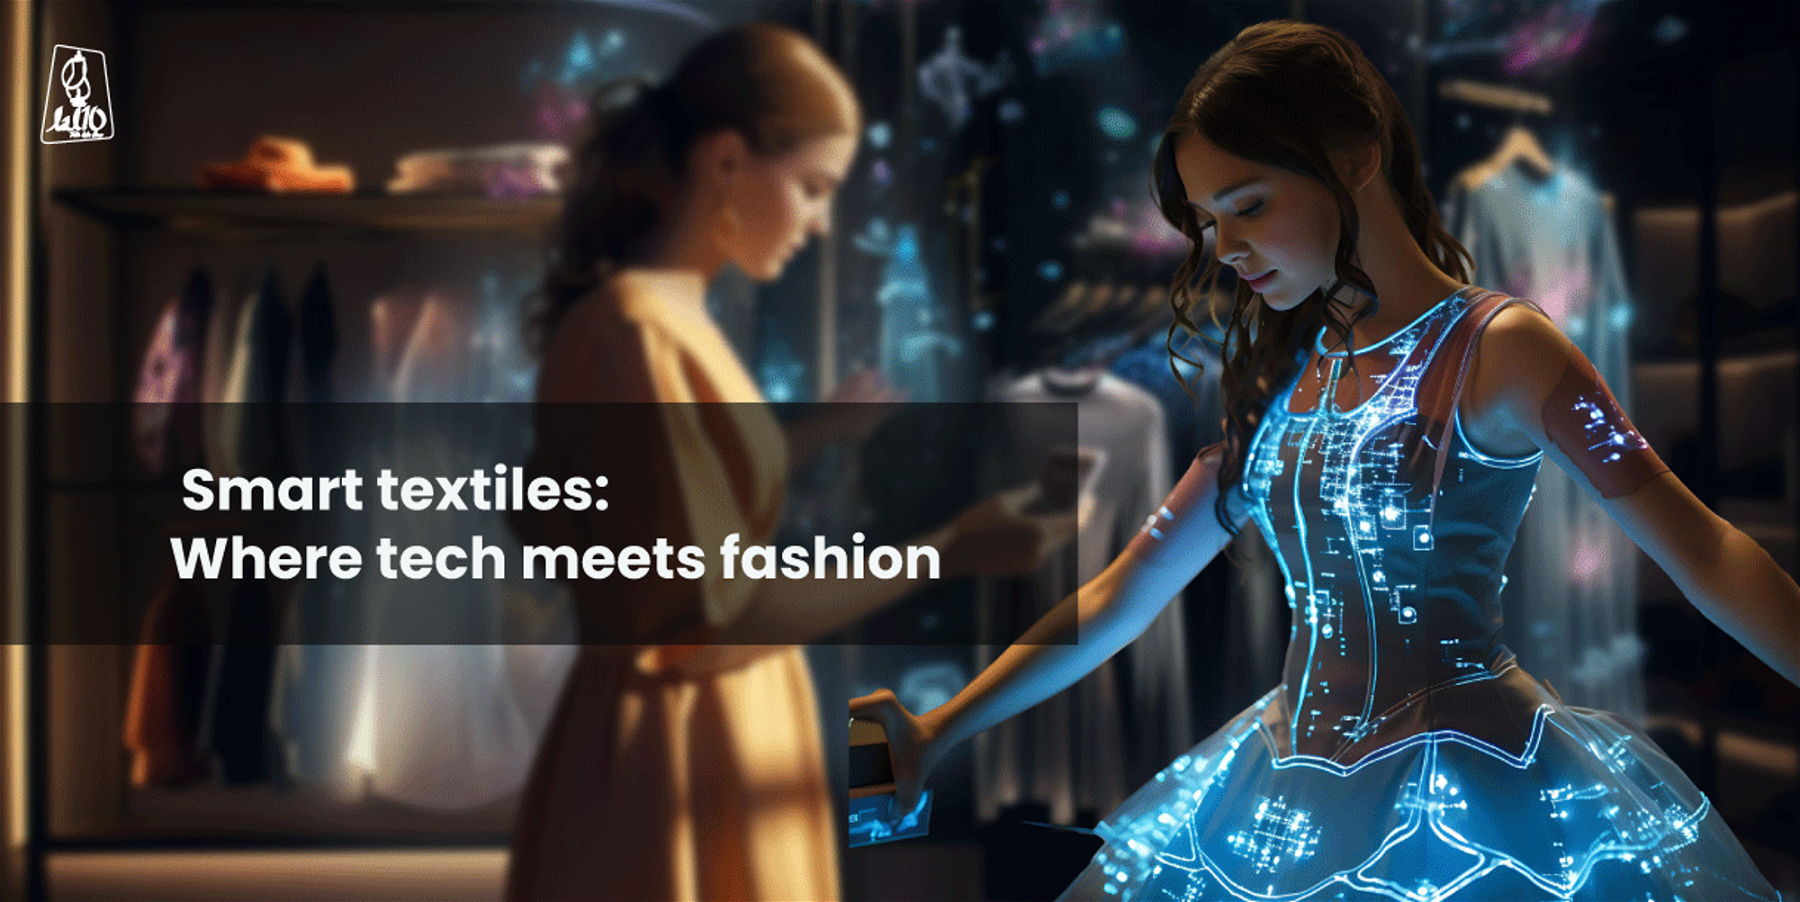 Smart textiles: Where tech meets fashion